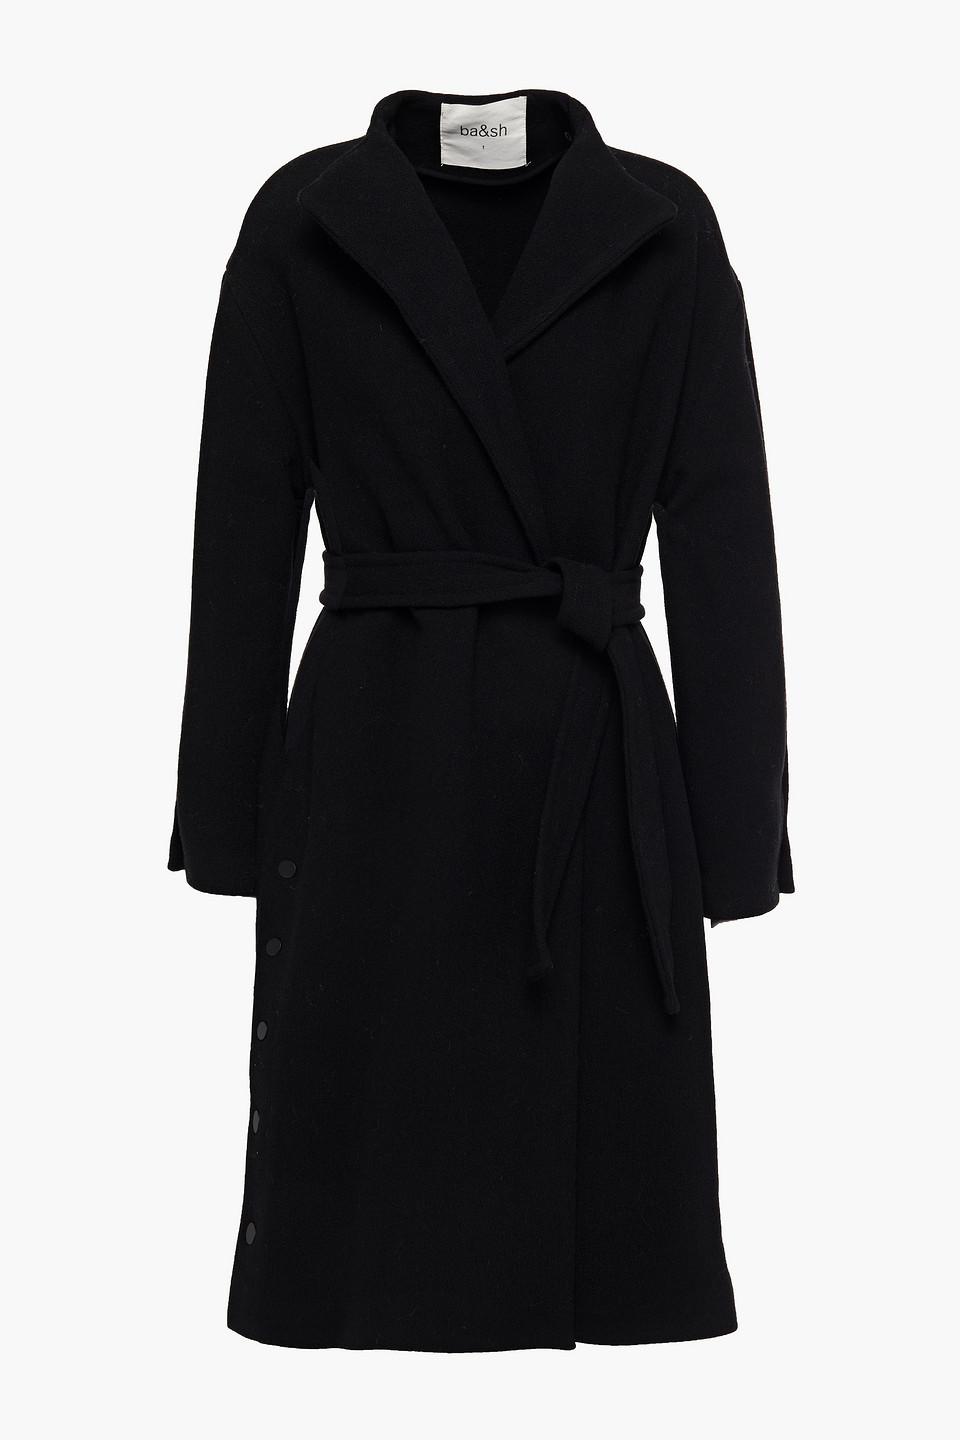 Ba&sh Jarry Belted Snap-detailed Wool-blend Felt Coat in Black | Lyst UK